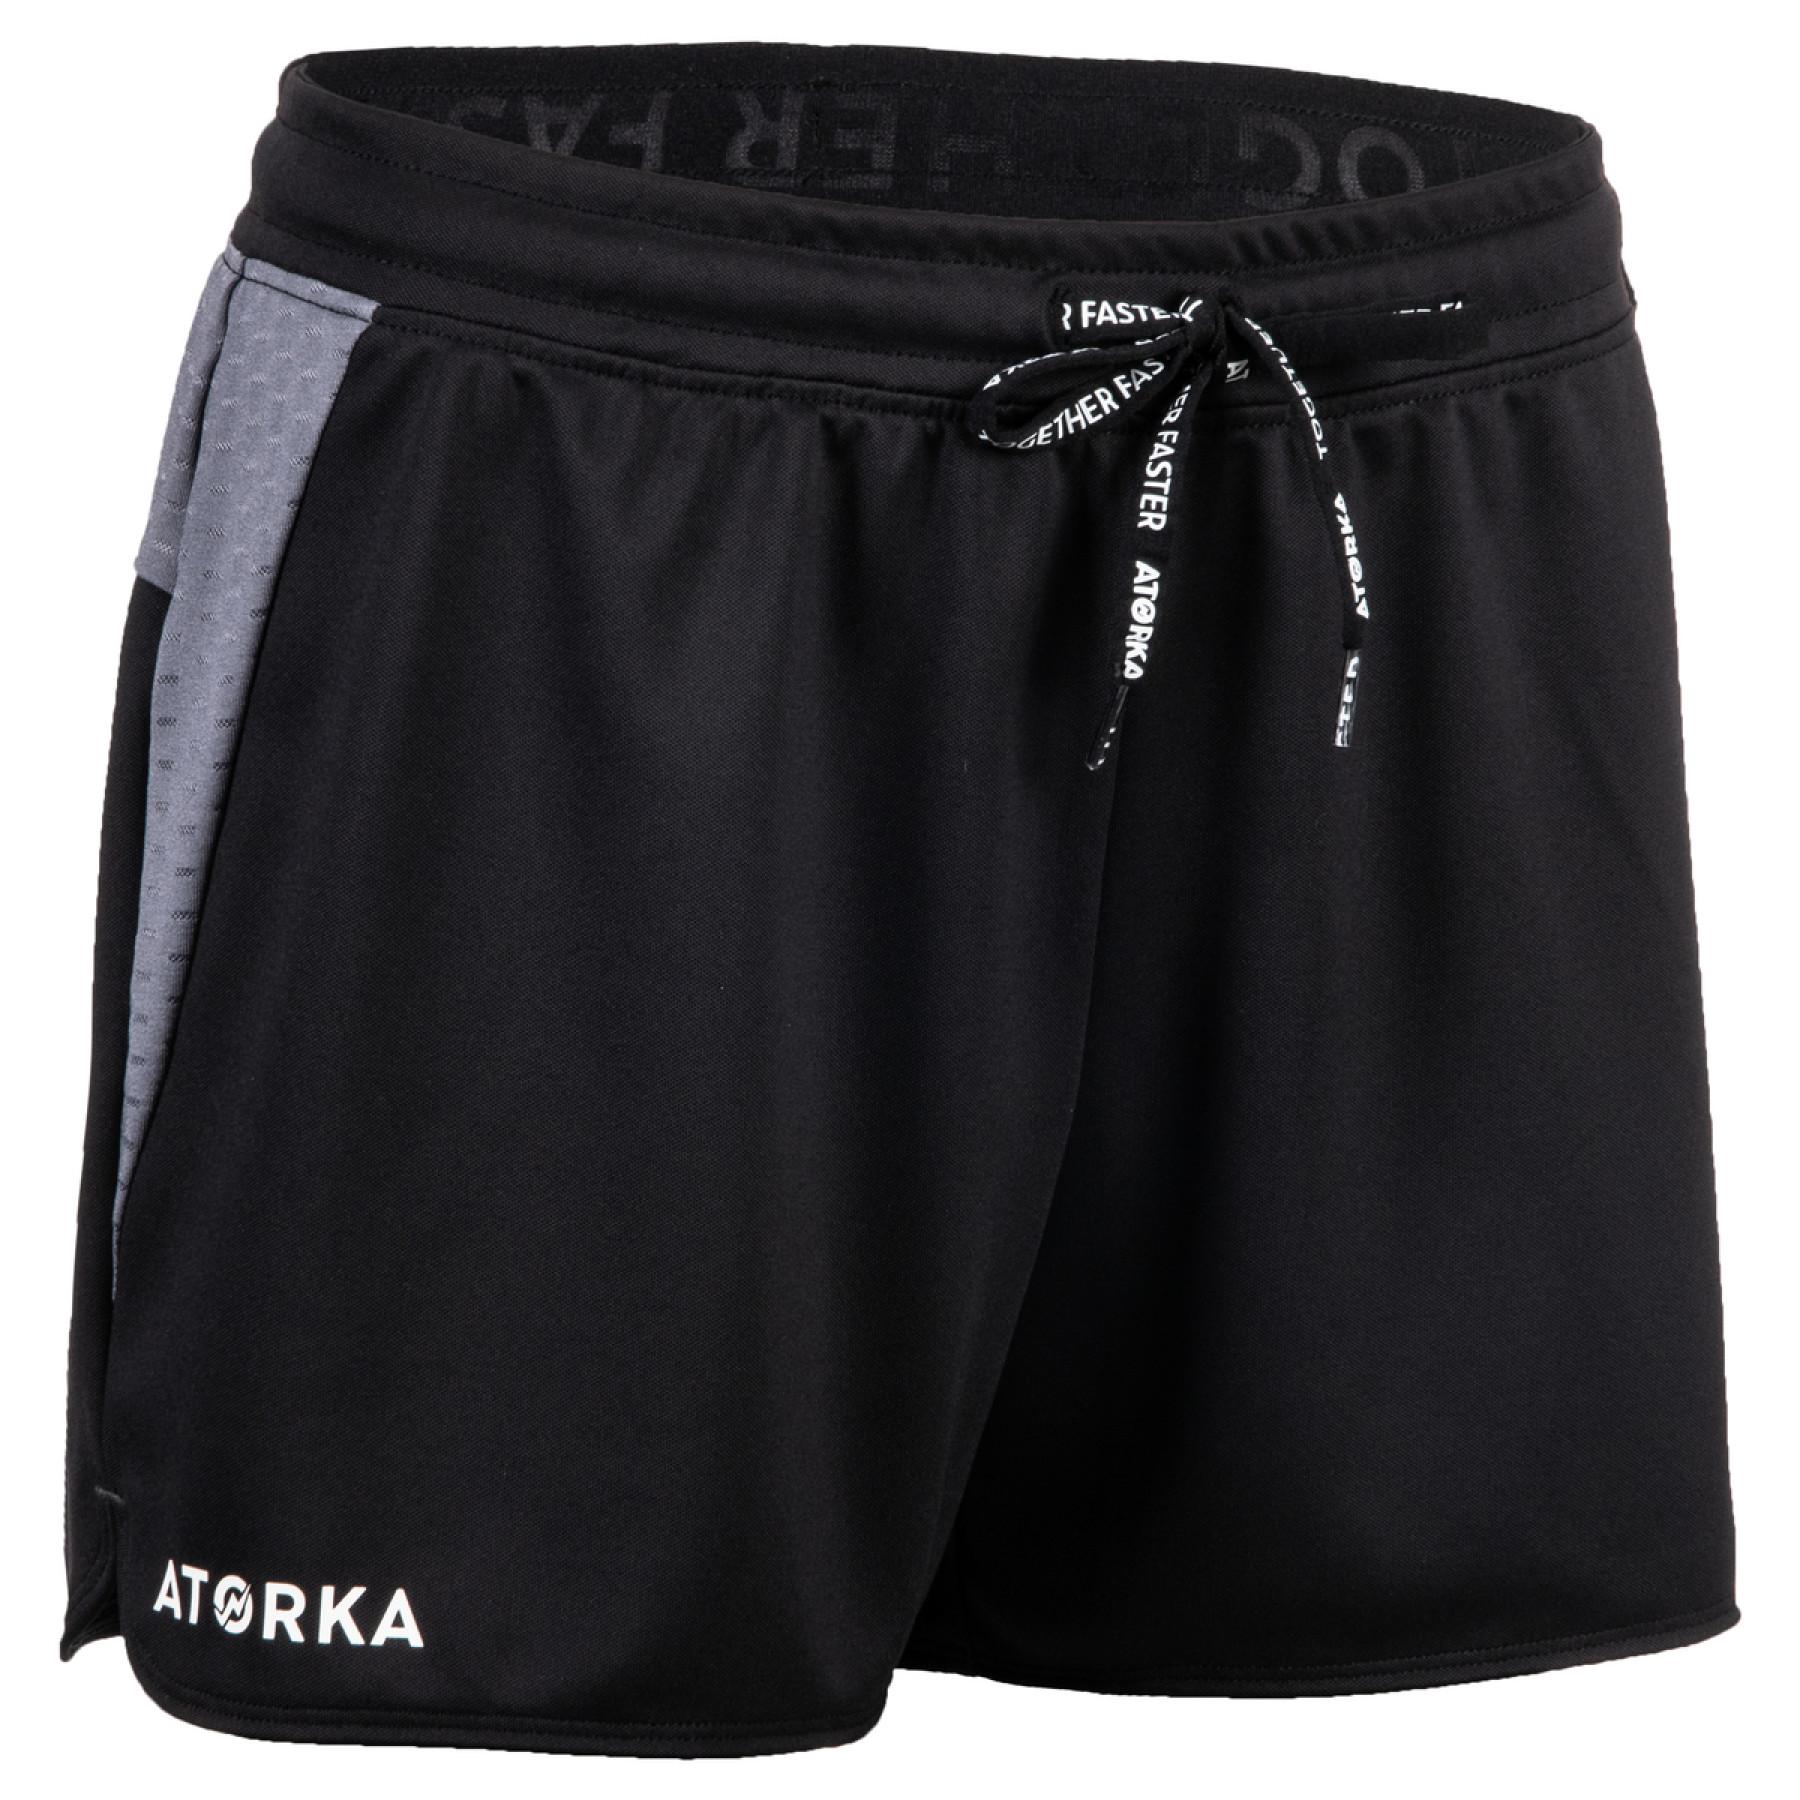 Women's shorts Atorka HS500S